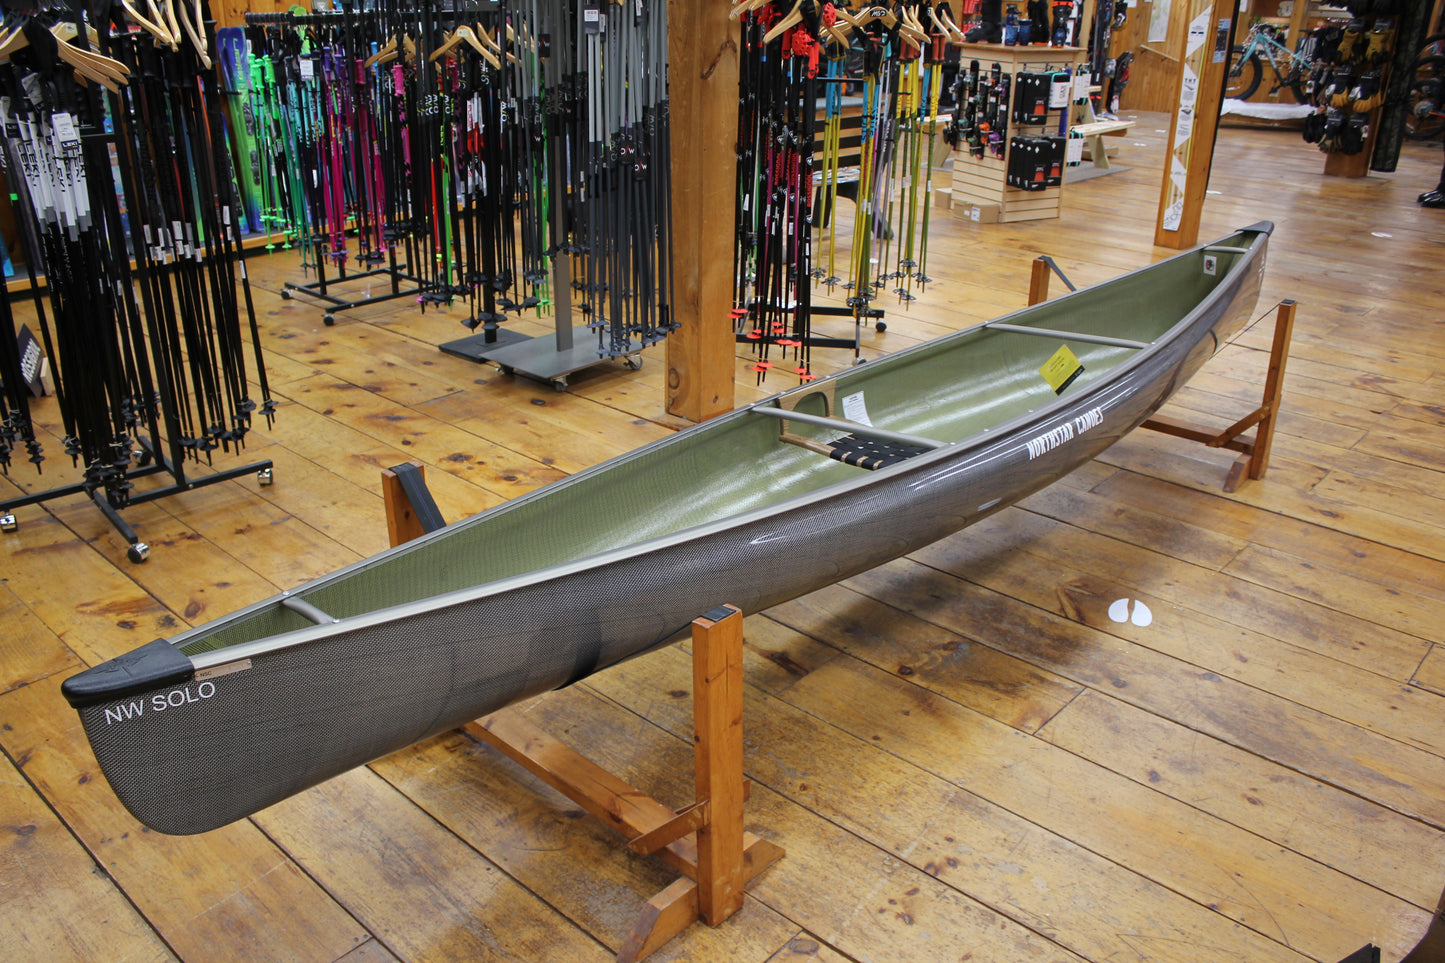 Northstar Northwind Solo 156 Canoe Aluminum Trim